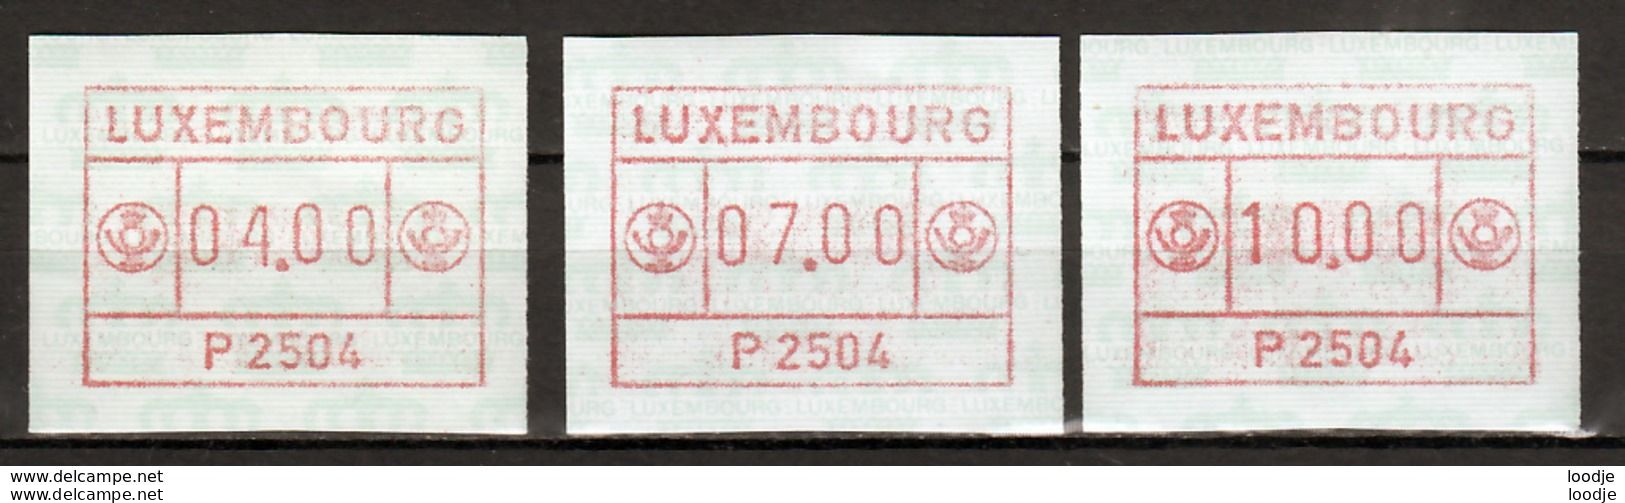 Luxemburg Automaatzegels Mi 1 Div. Postfris - Frankeervignetten